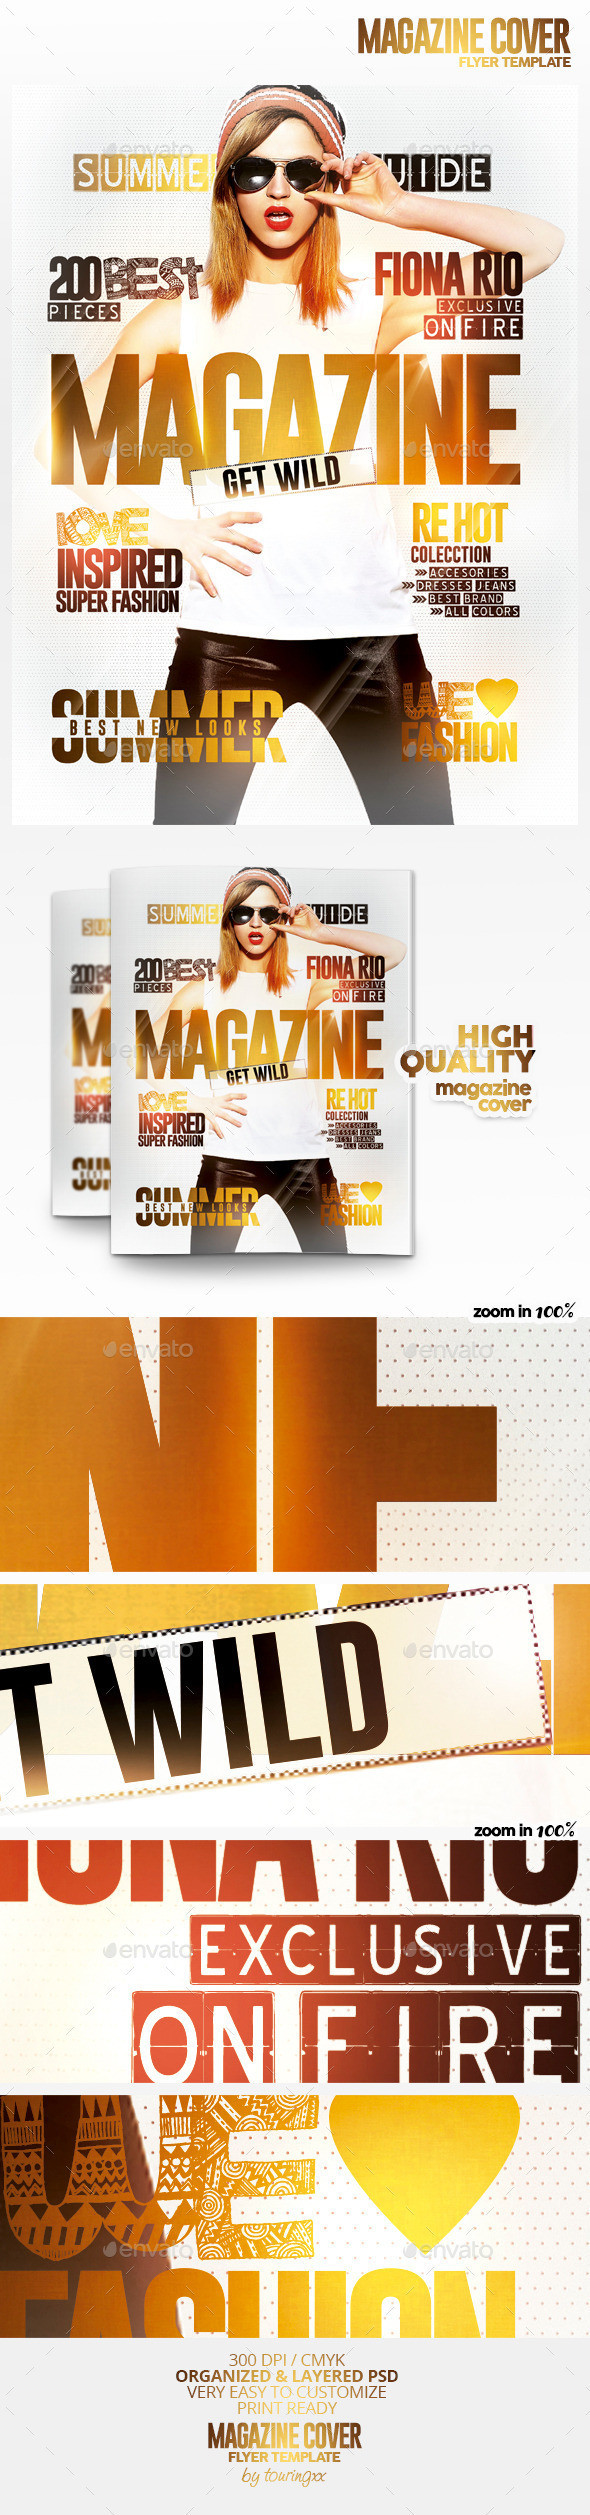 Magazine cover preview